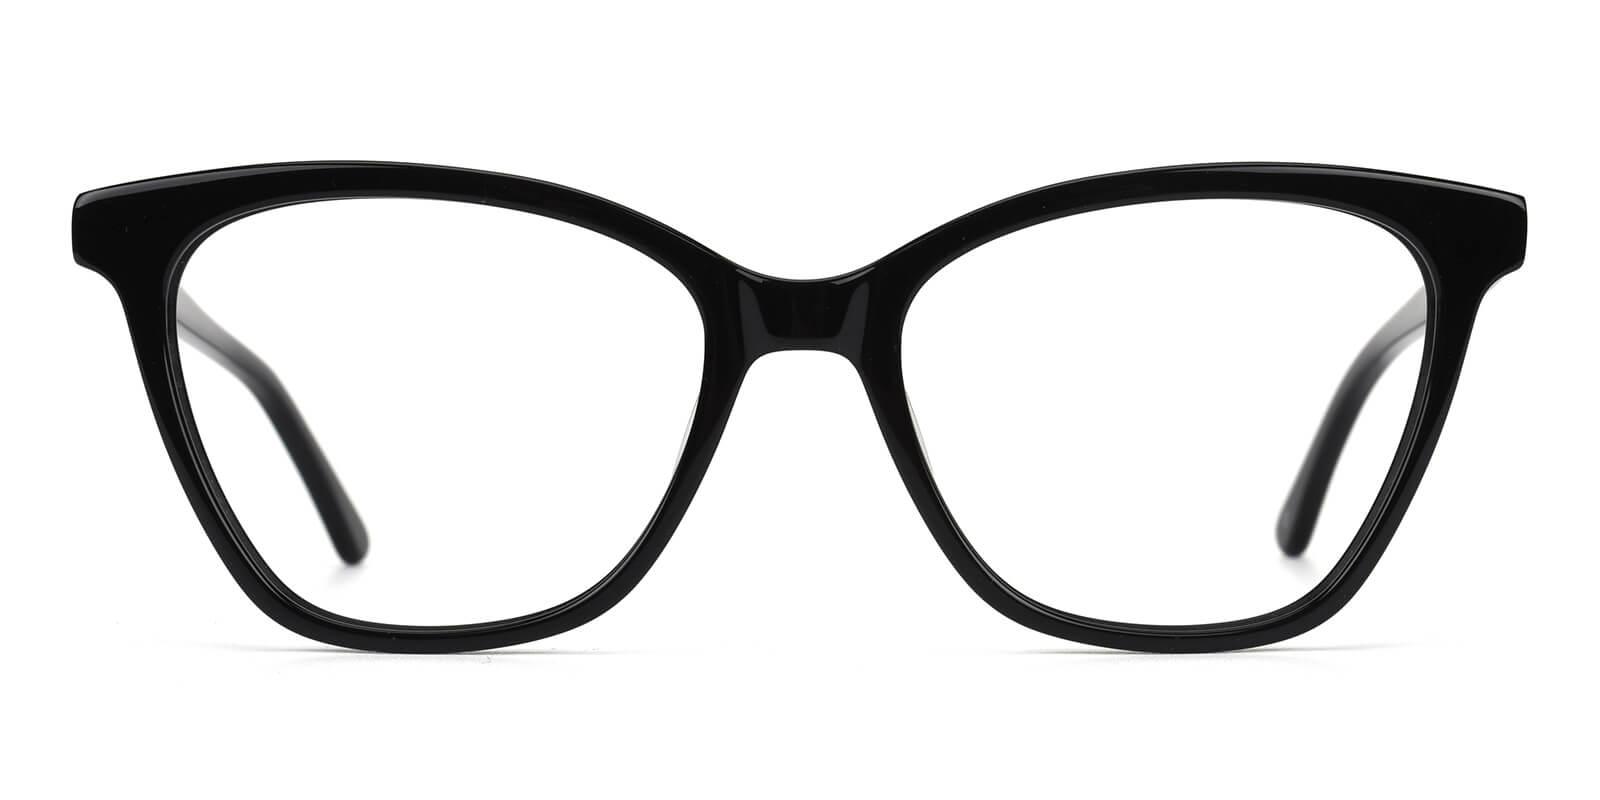 Flint Eyeglasses - Cheap Prescription Glasses Online